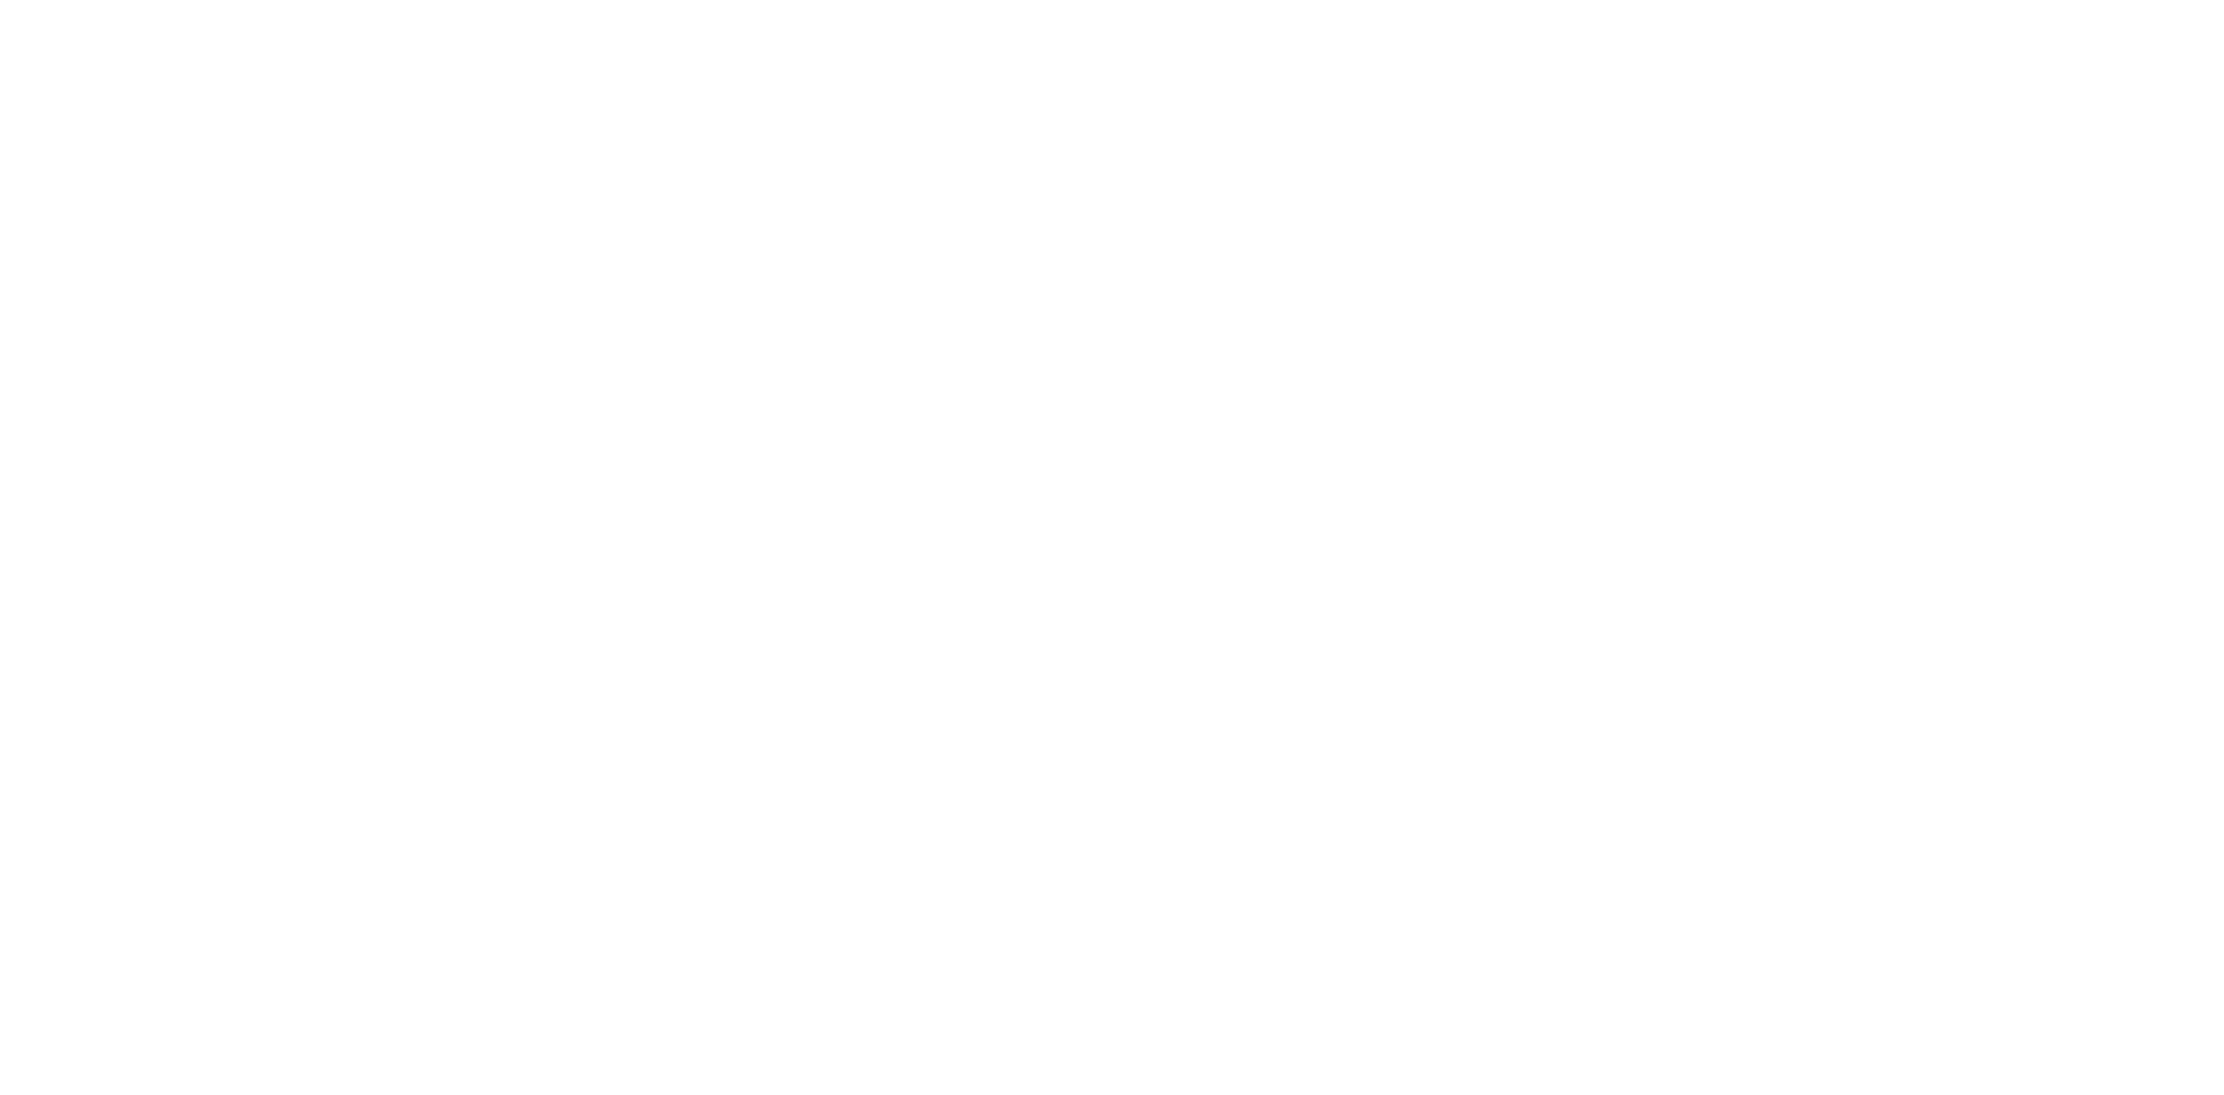 St Oswald's Hospice